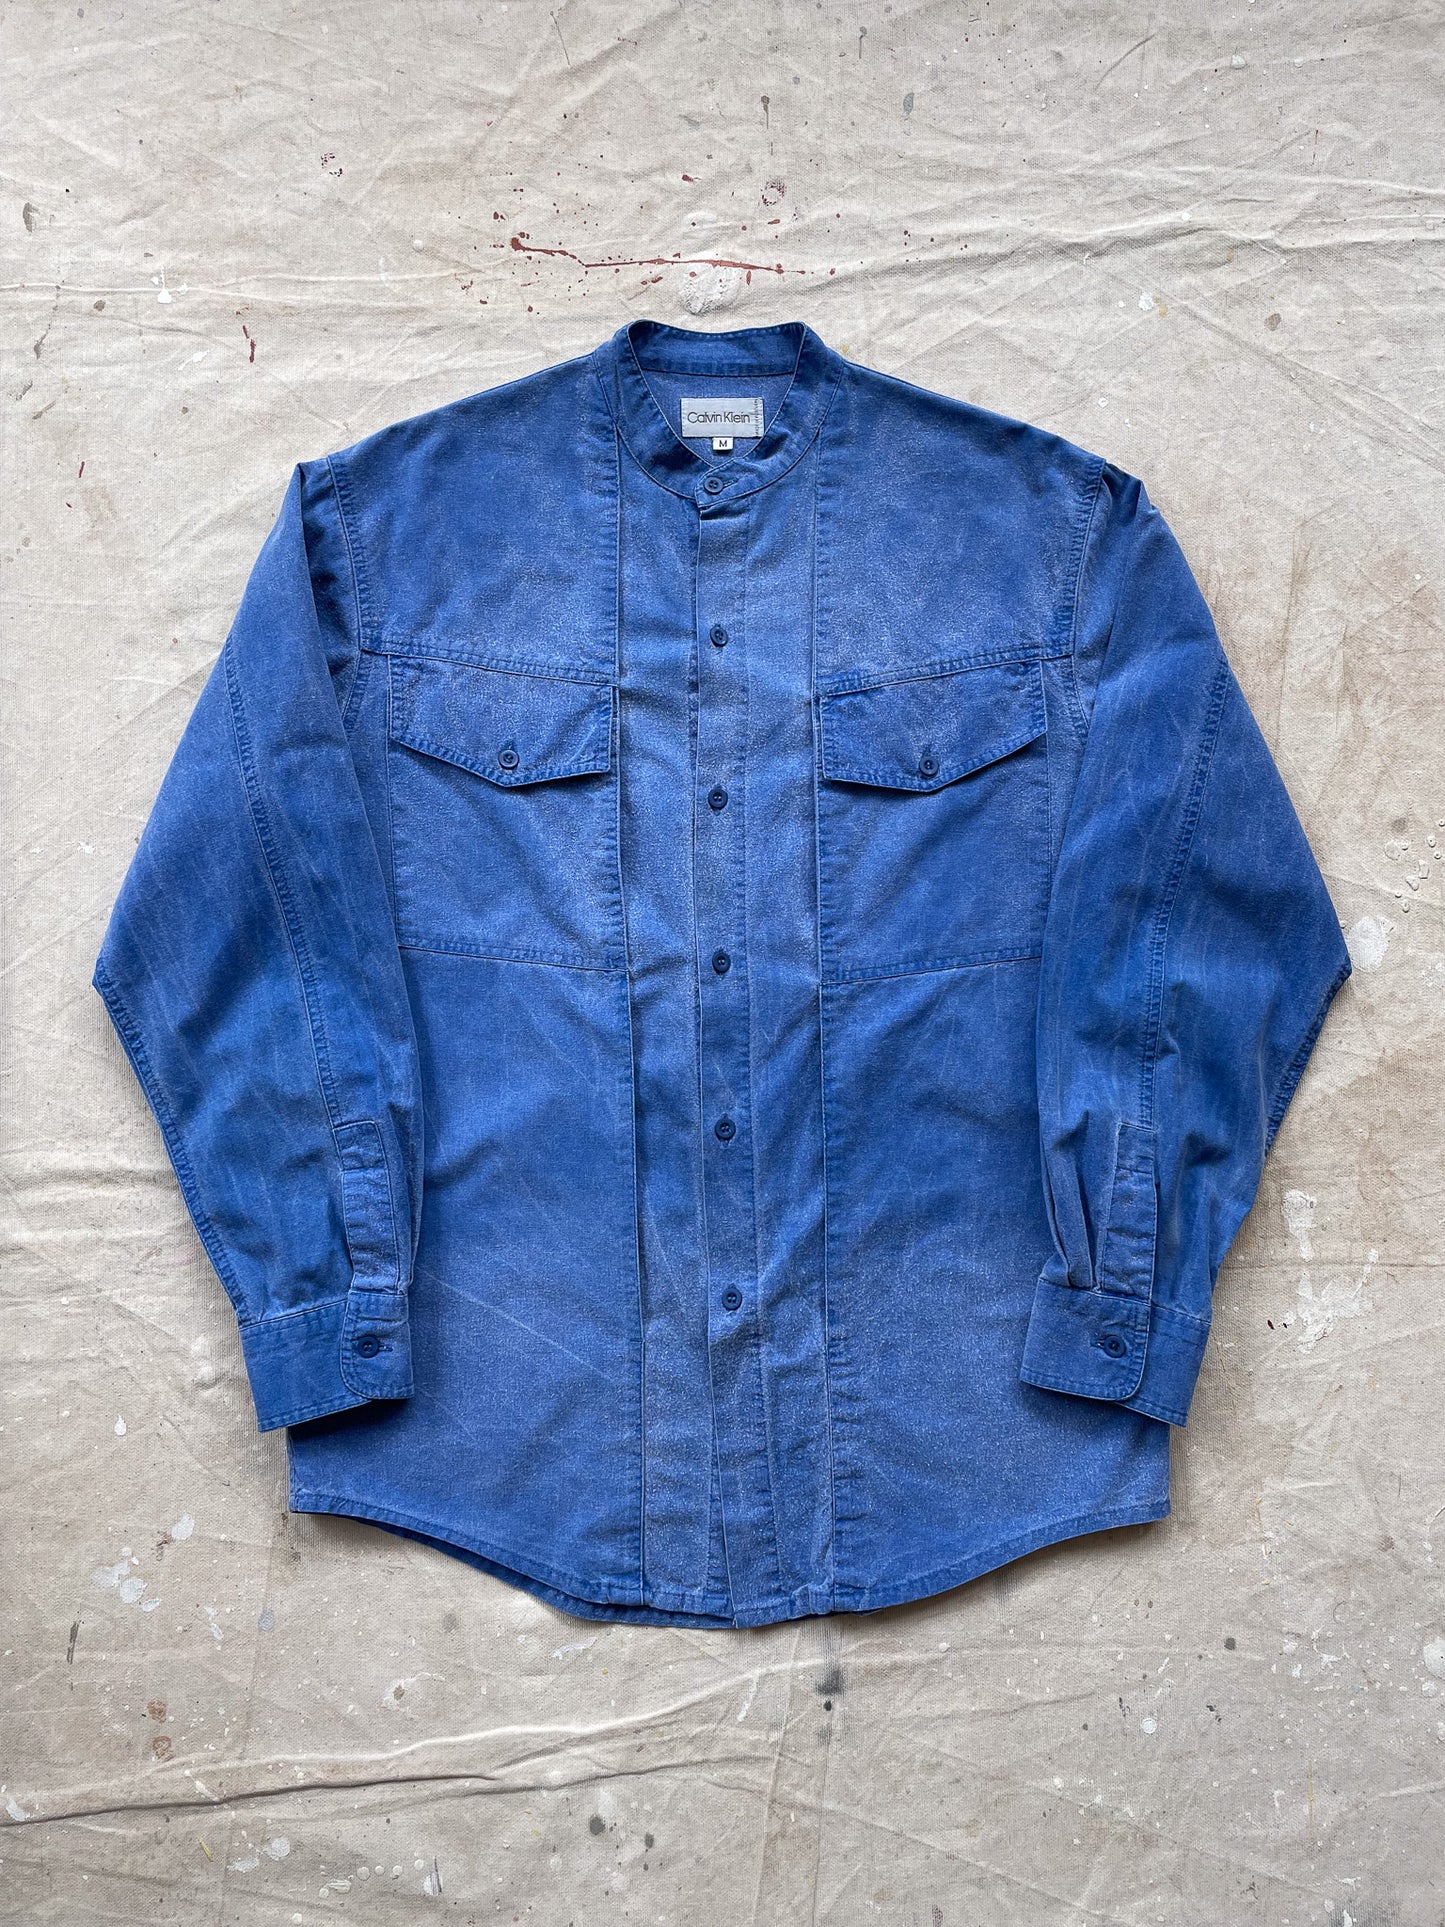 Calvin Klein Chambray Button Up Shirt—[M]